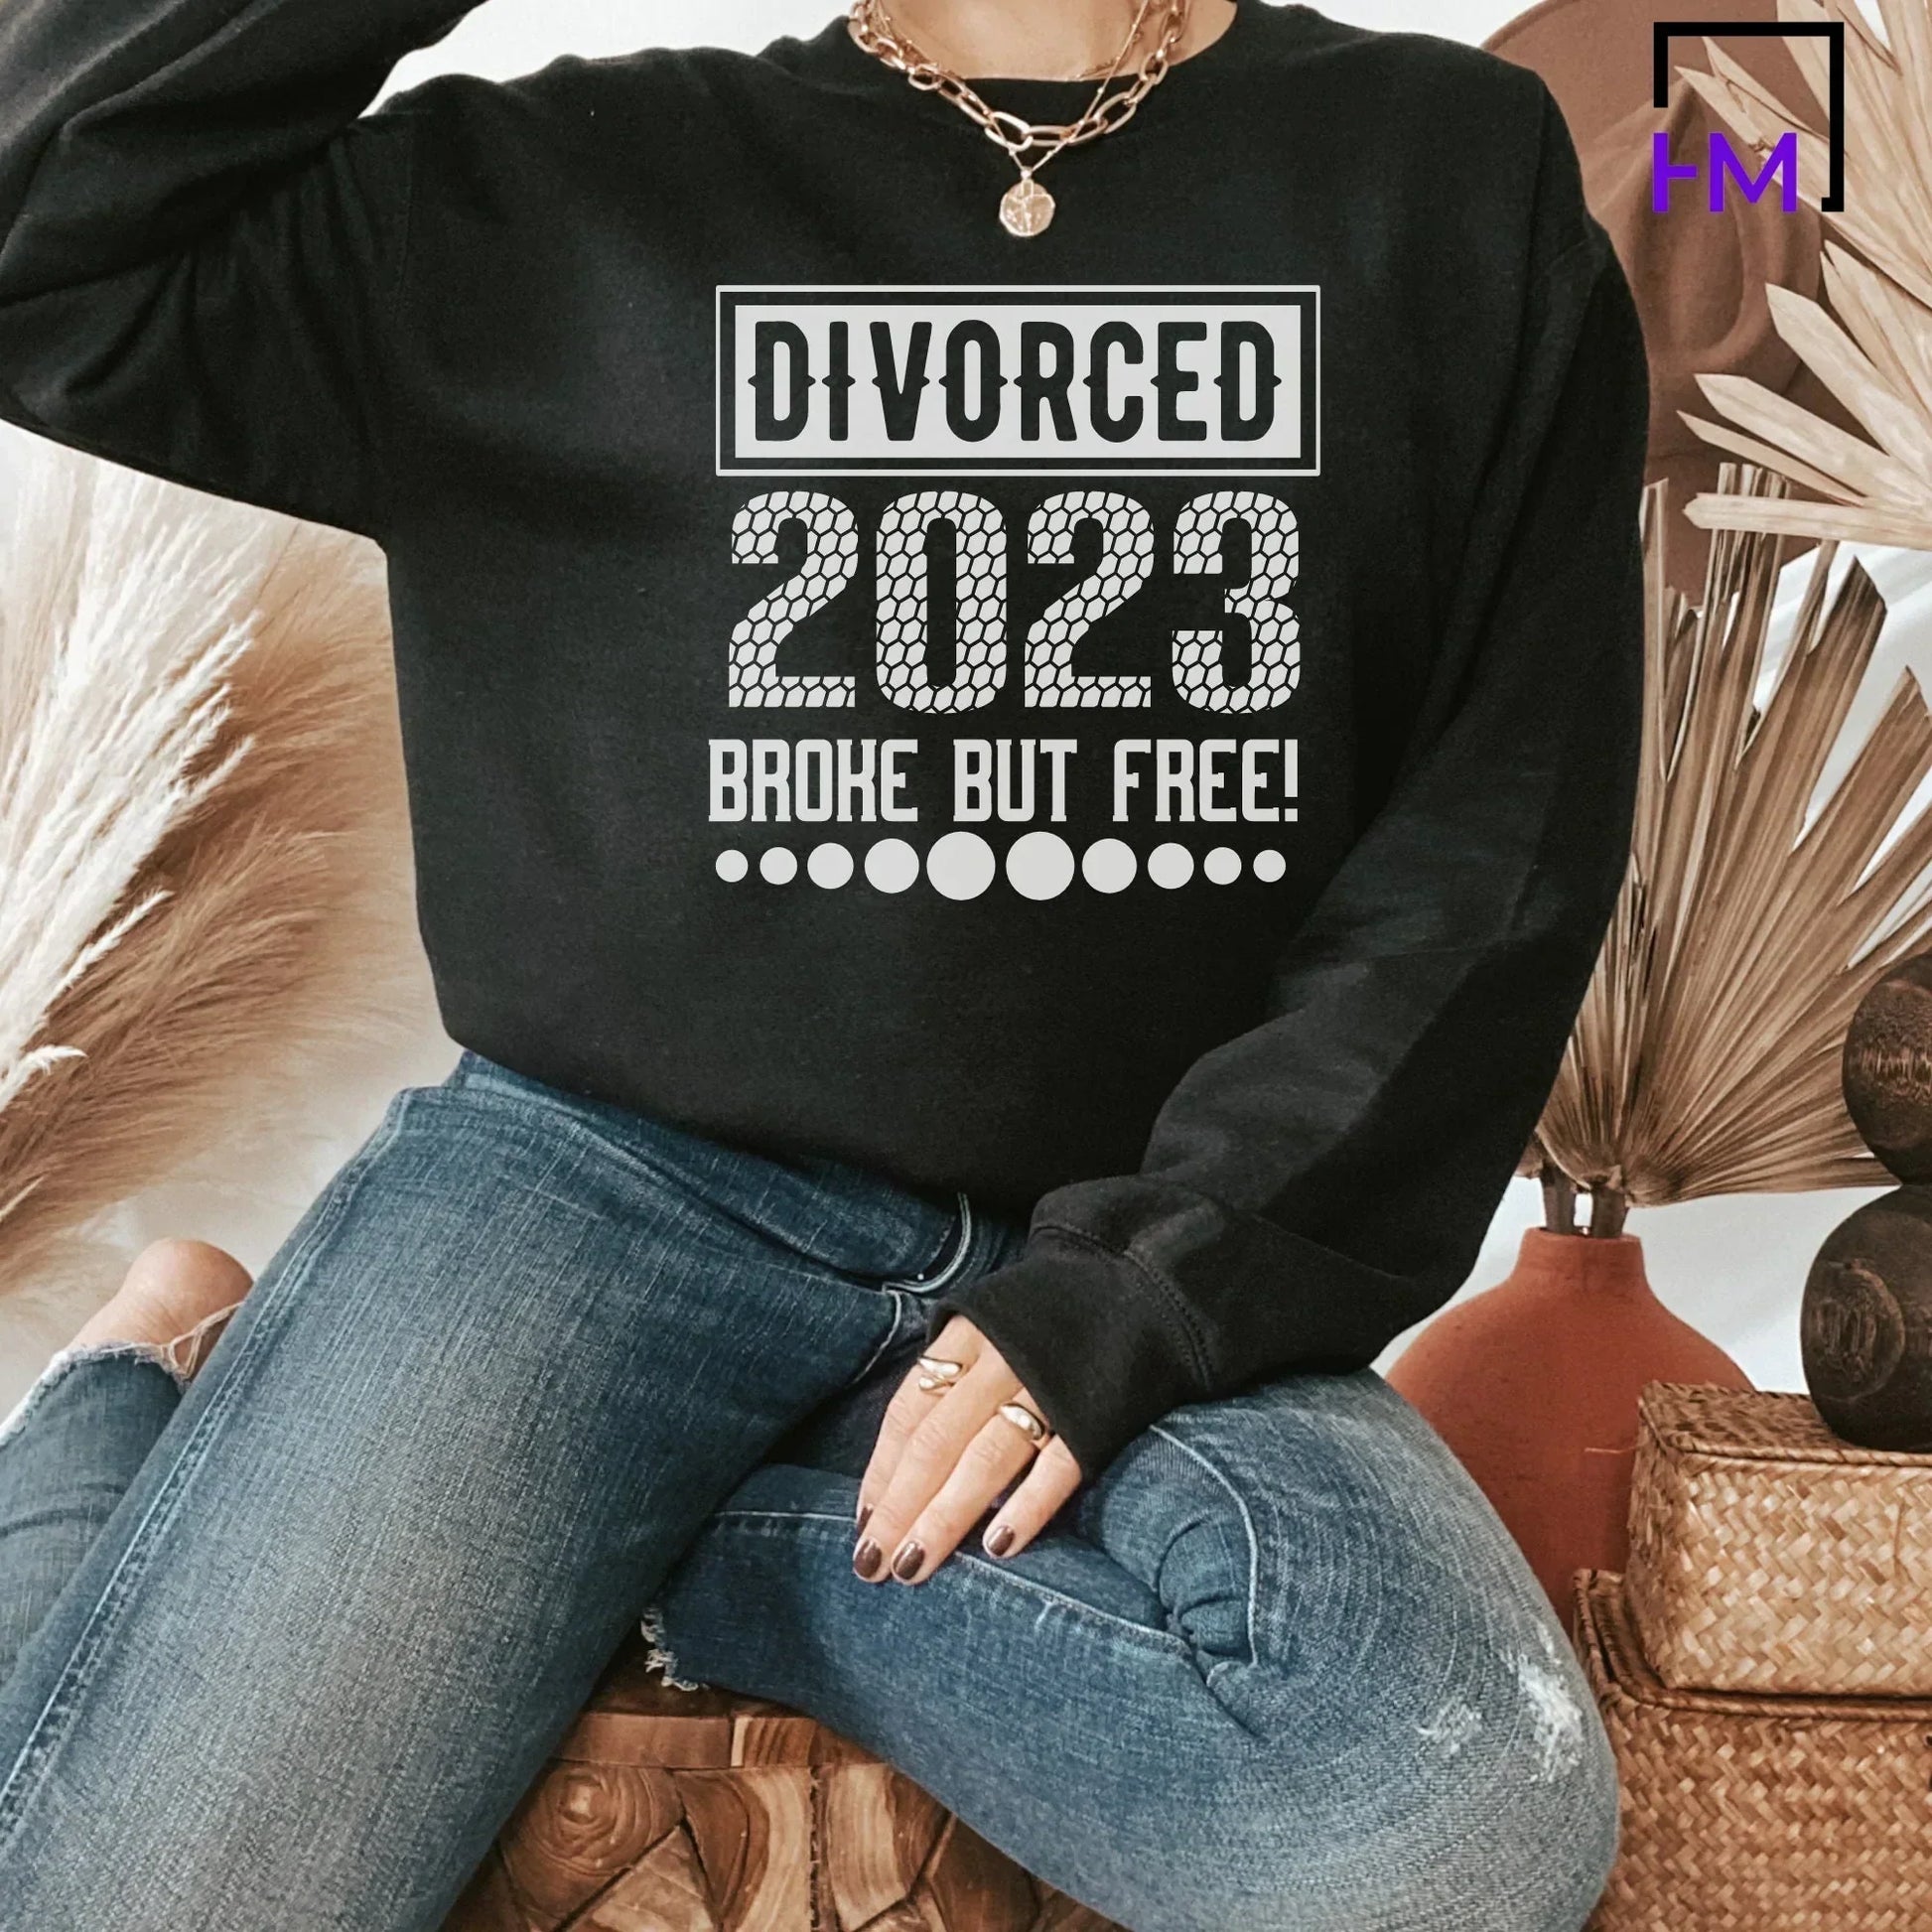 Newly Divorced Shirt, Sarcastic T-Shirt 2023 Divorce, Divorcee Gifts, New Beginnings Gifts, New Beginnings for Divorced, Divorce Party Gift HMDesignStudioUS